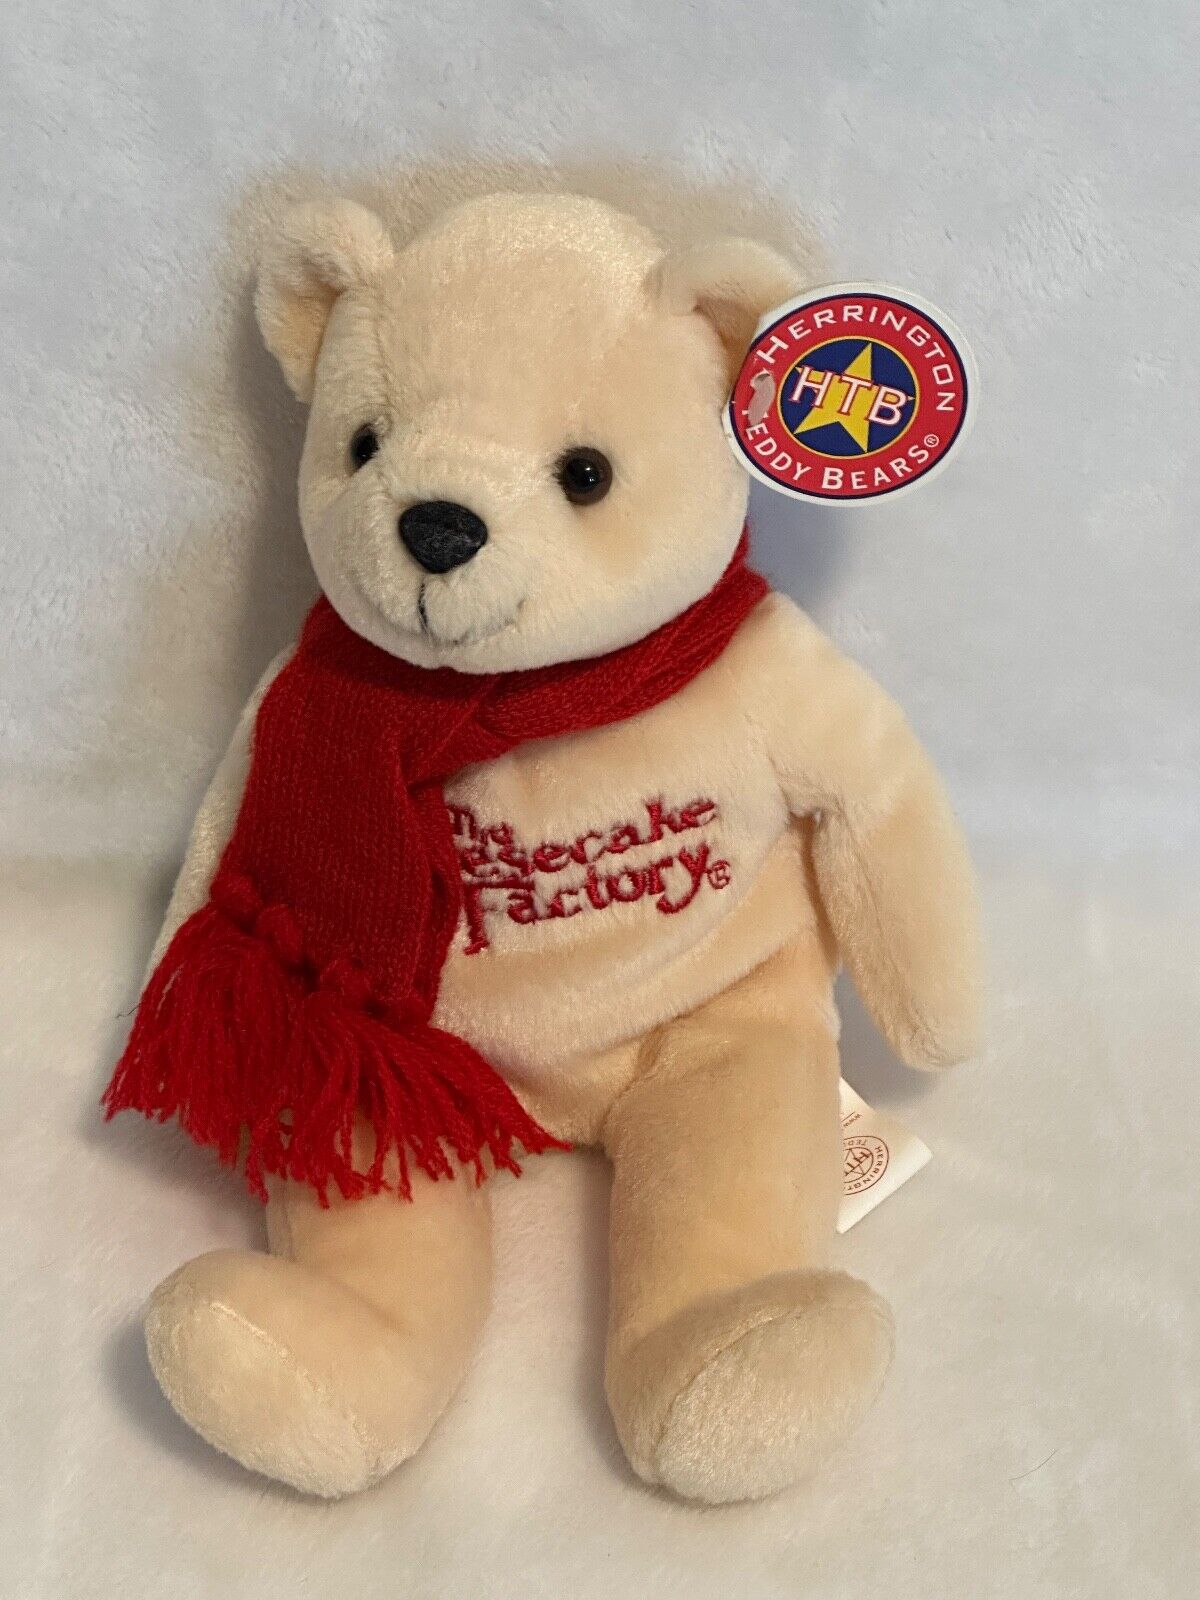 VTG Herrington Teddy Bear Cheesecake Factory Limited Edition Beanie Baby Plush